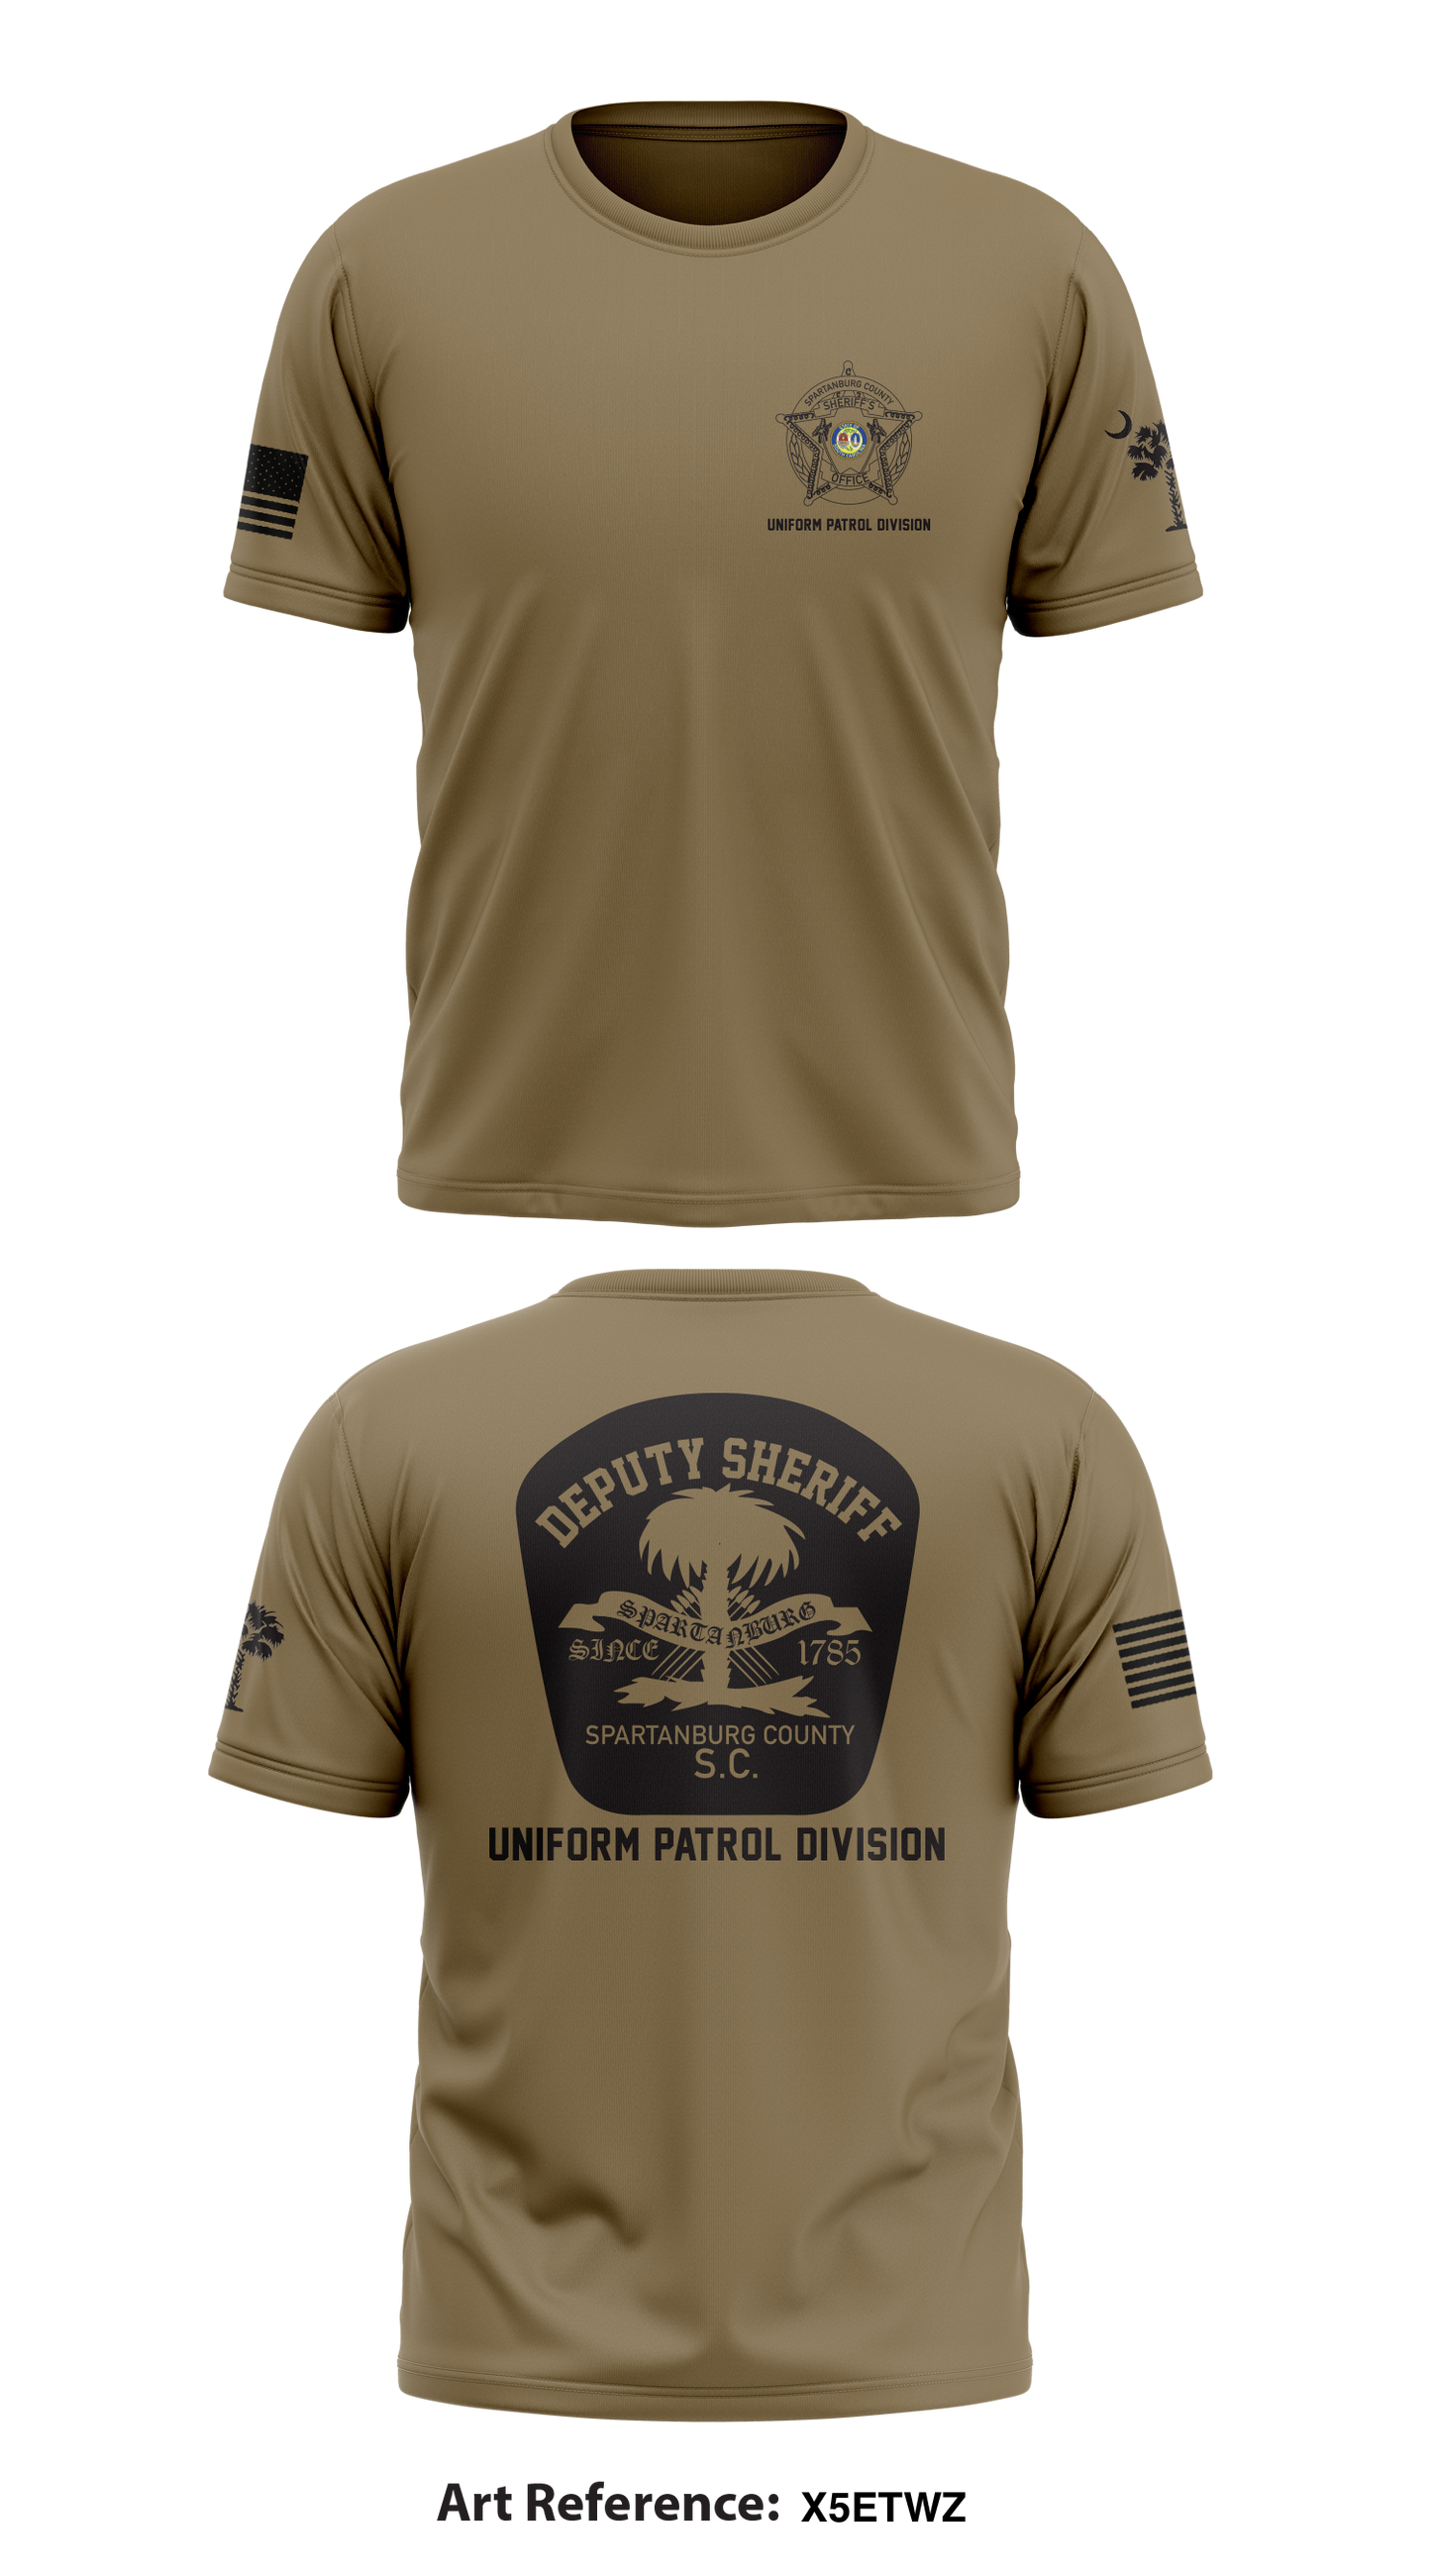 Uniform Patrol Store 1 Core Men's SS Performance Tee - X5EtWZ